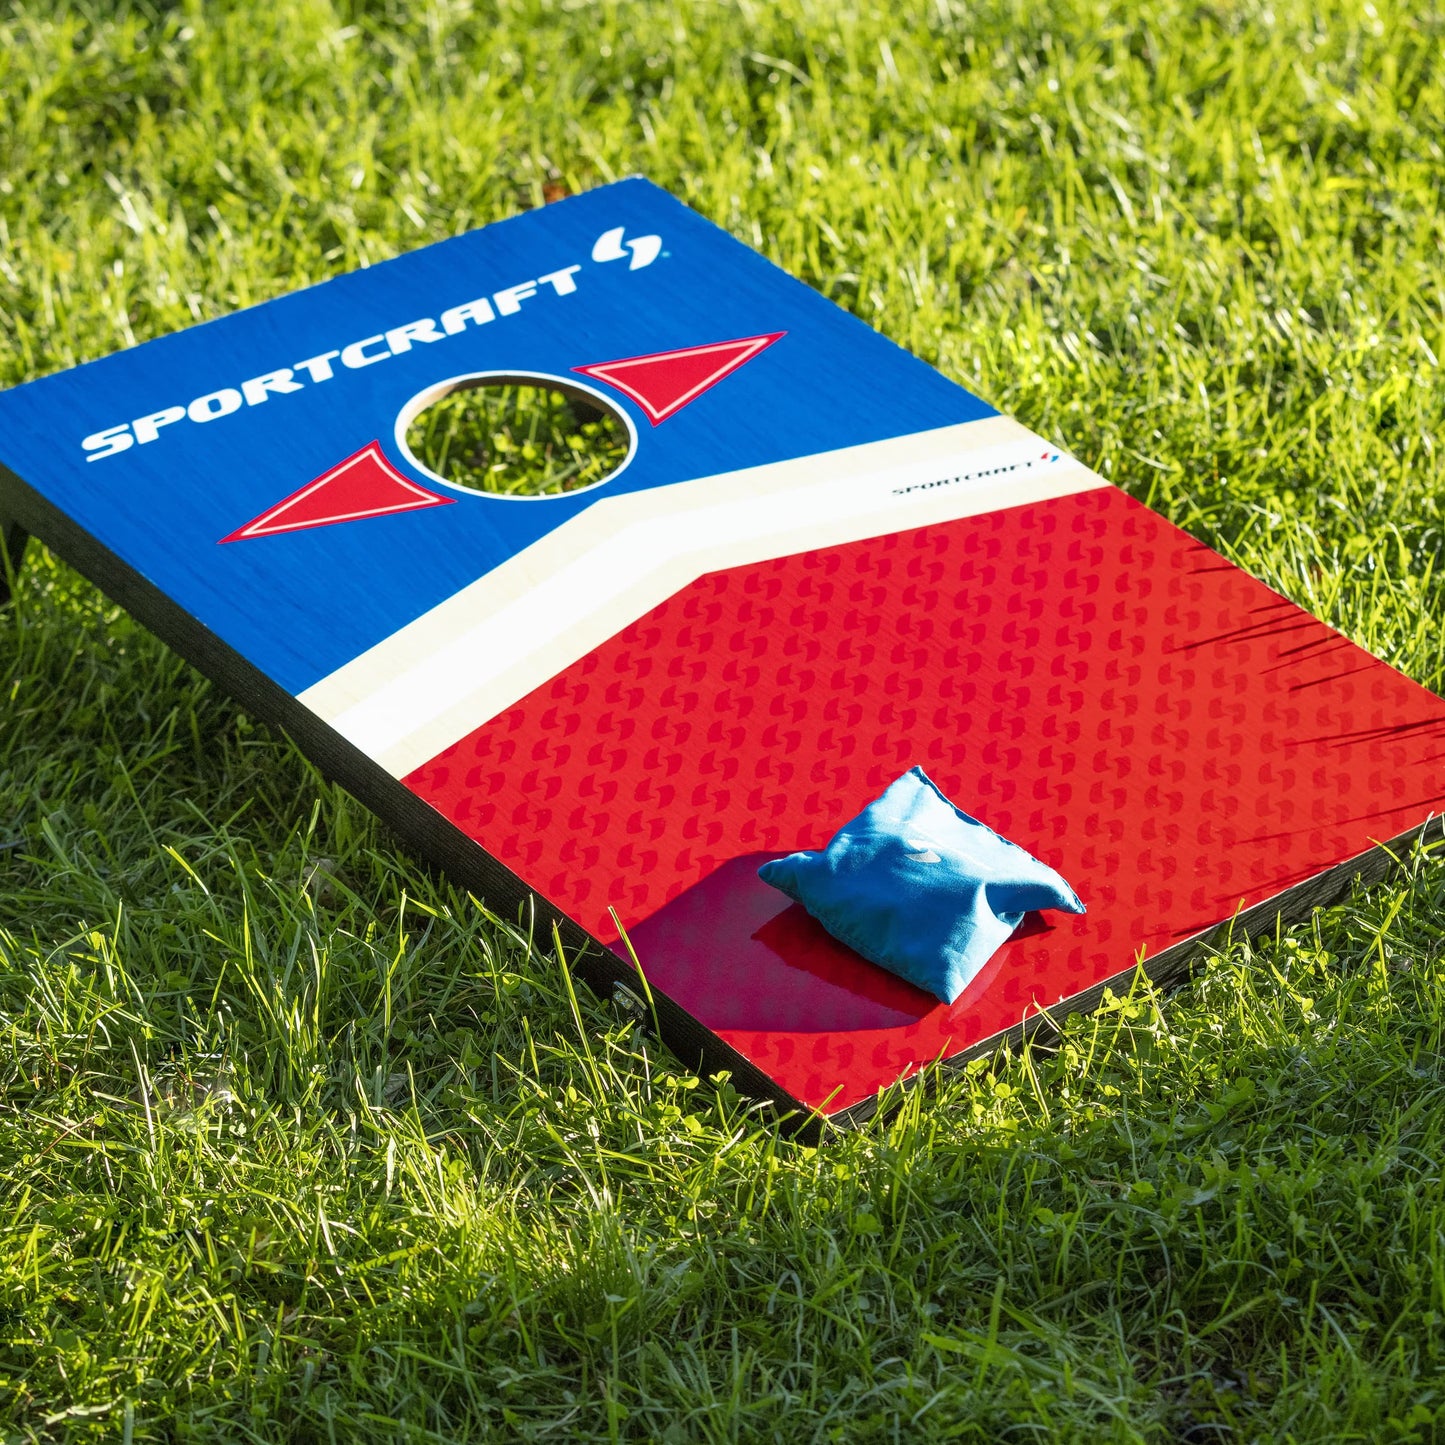 Sportcraft Wooden Corn Hole Bean Bag Toss Lifestyle Image, Target board sitting on grass